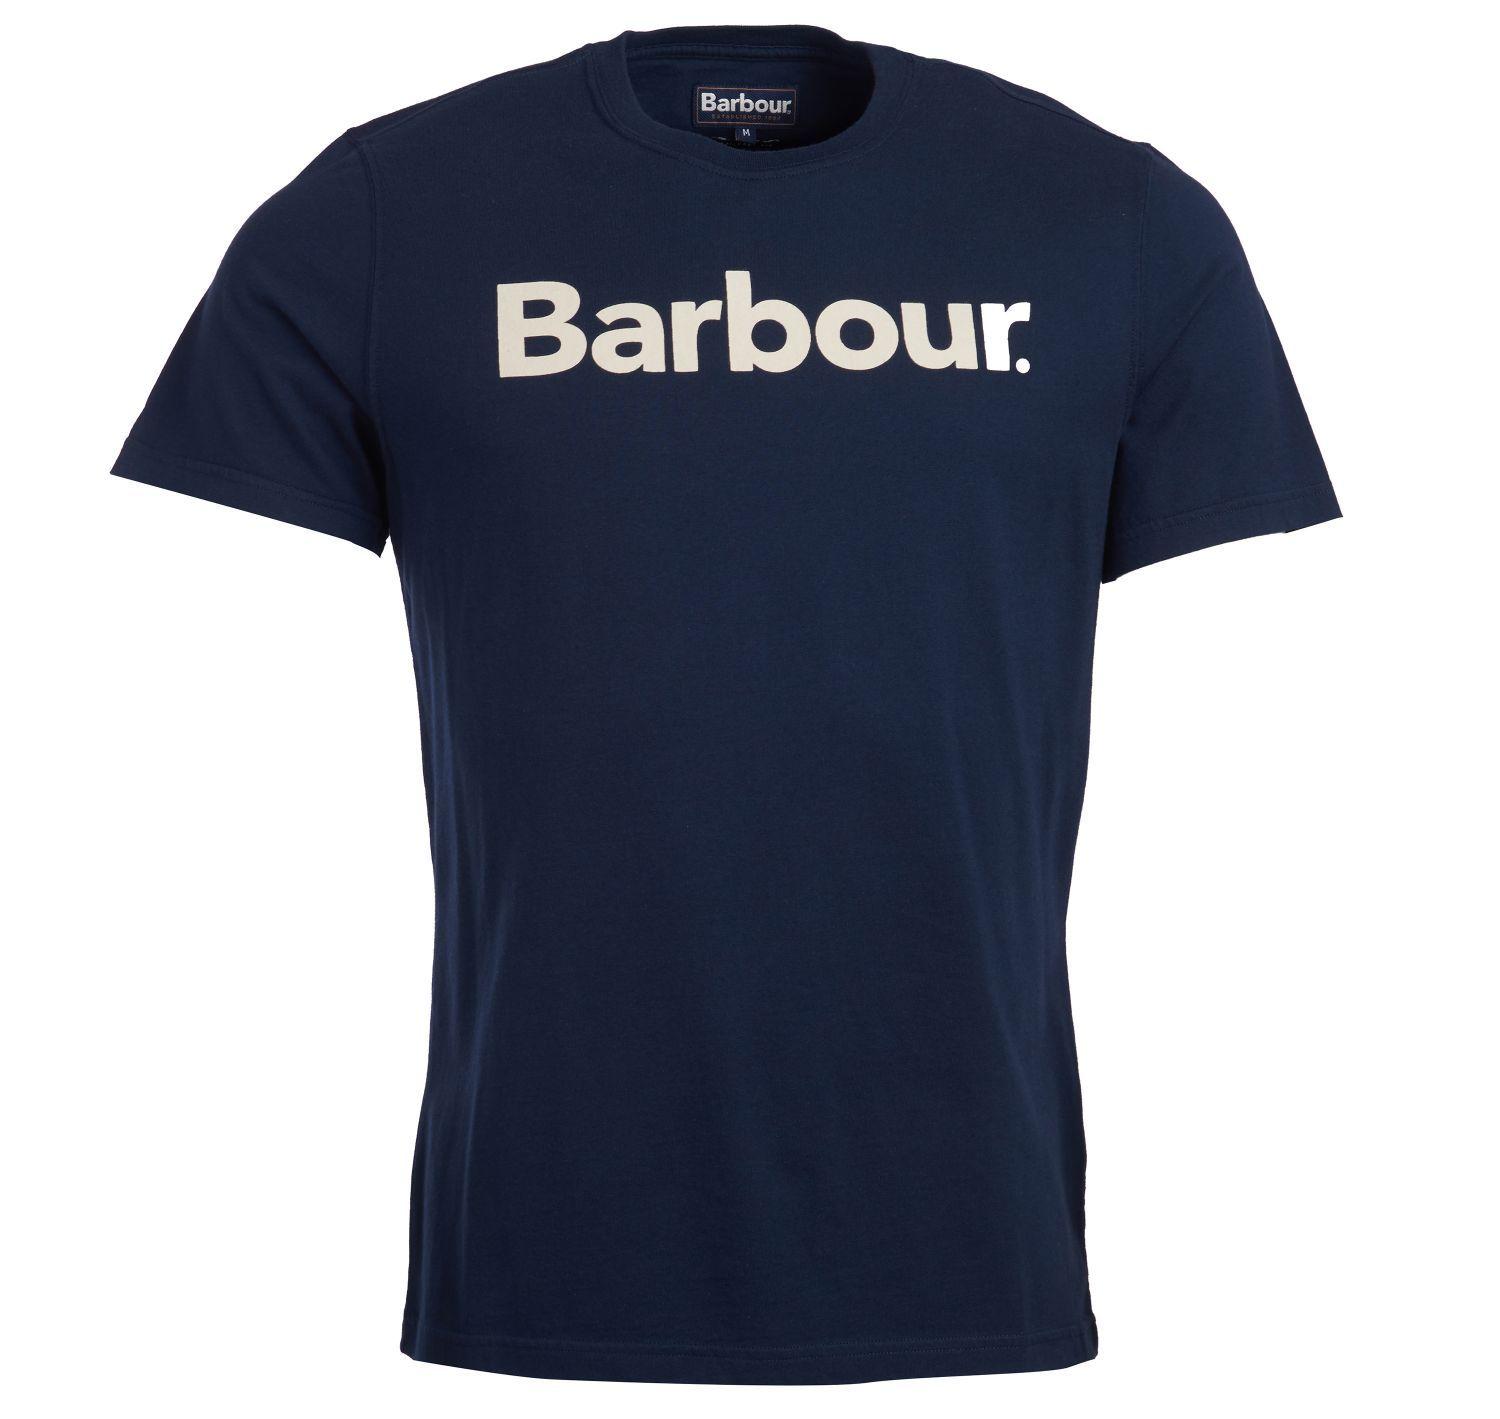 Barbour Logo - Barbour Logo T-Shirt | Barbour International